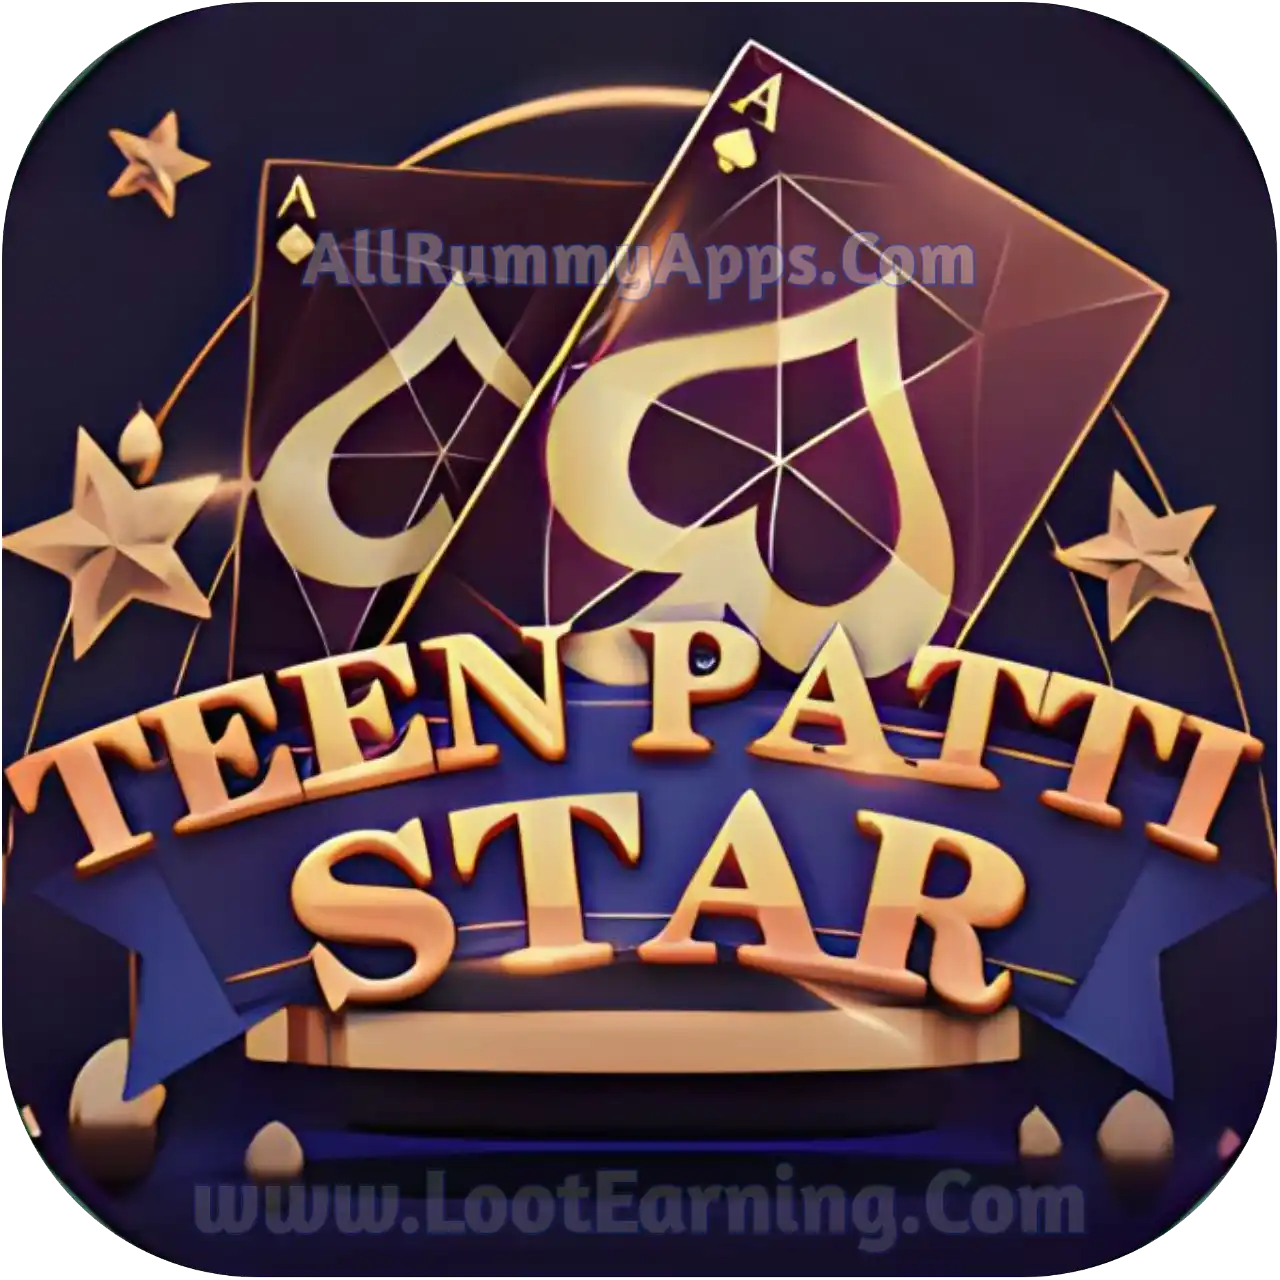 Teen Patti Star - All Rummy App